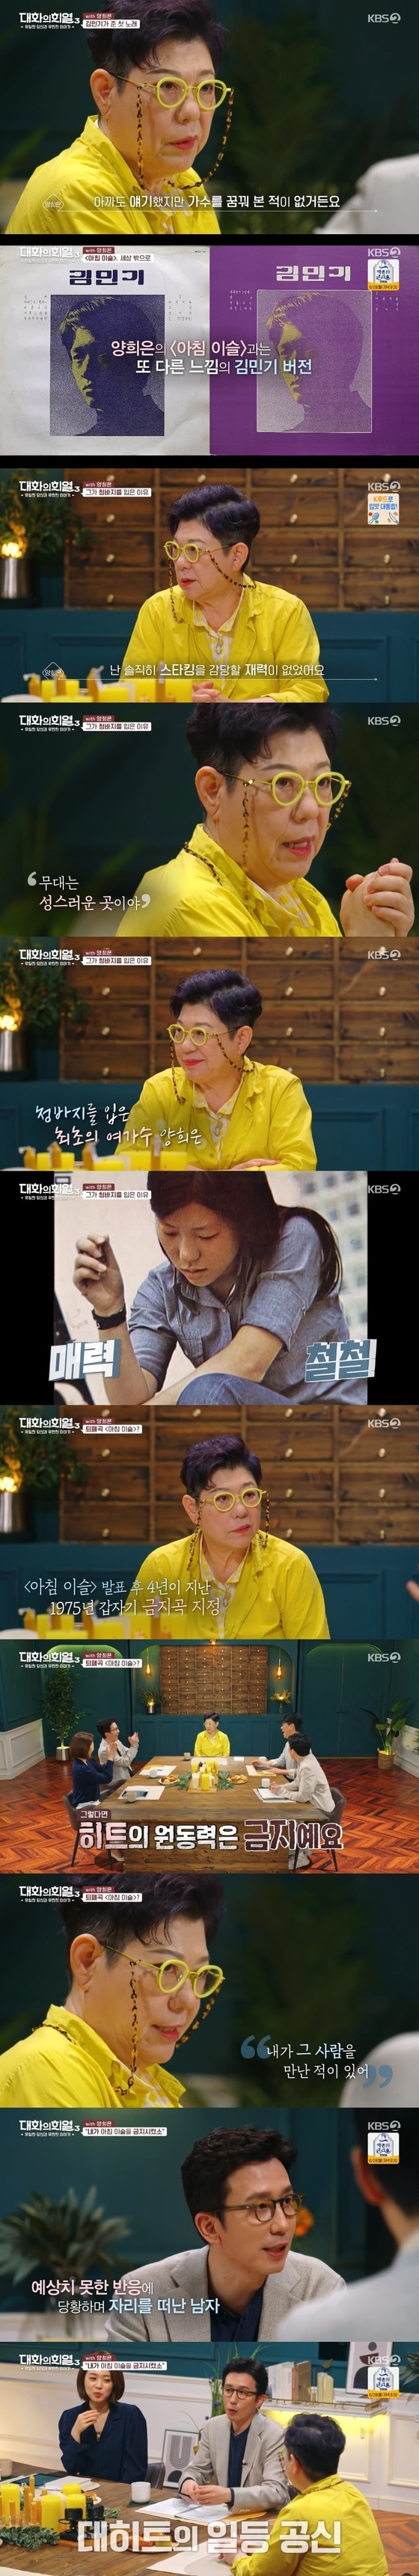 KBS 2TV '대화의 희열 3' 캡처 © 뉴스1